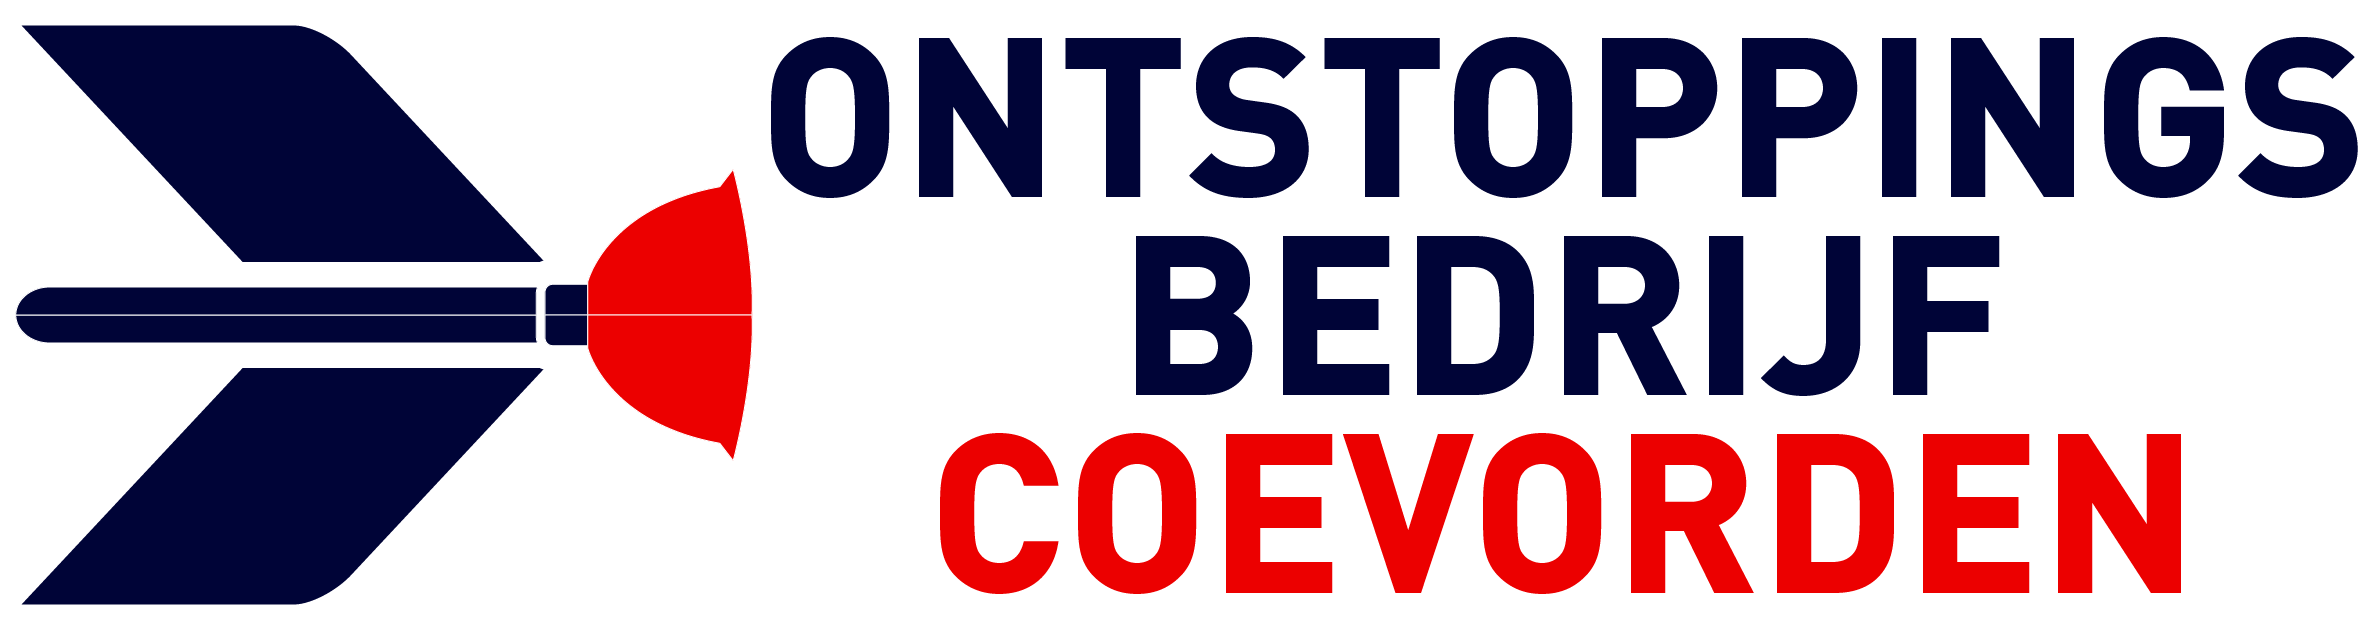 Ontstoppingsbedrijf Coevorden logo